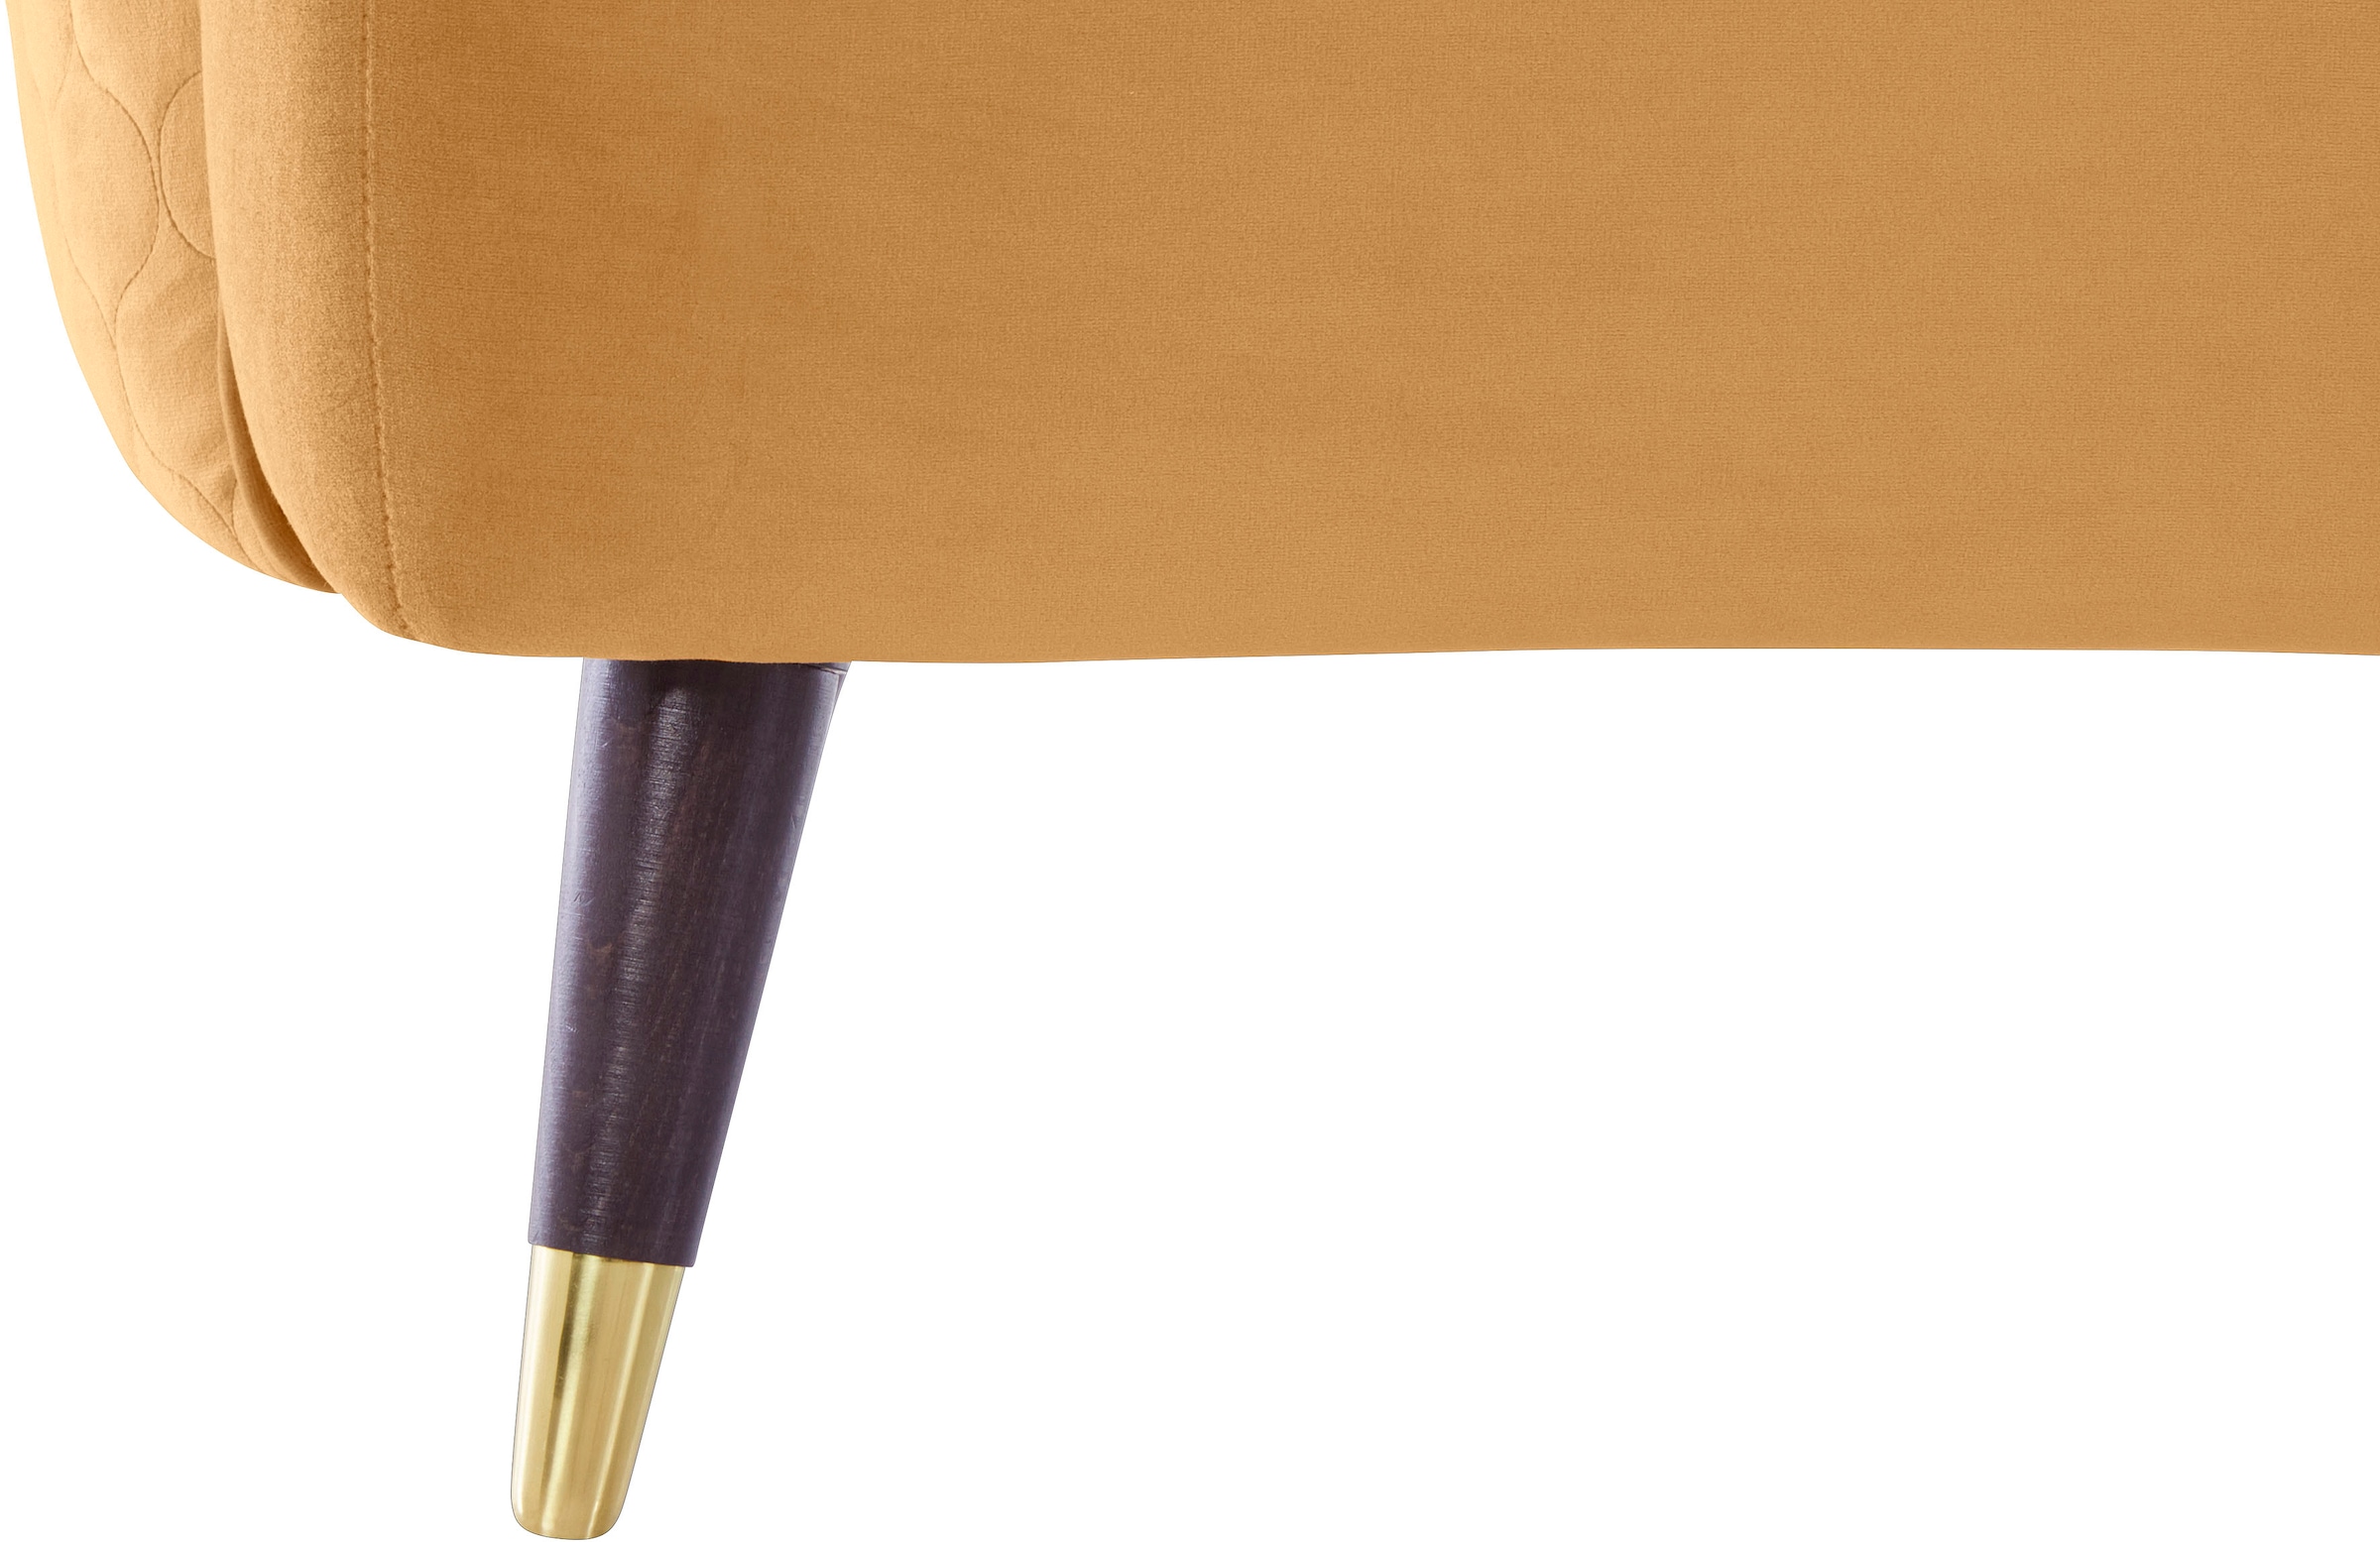 Guido Maria Kretschmer Home&Living Sessel »Oradea Cocktailsessel«, mit eleganter Steppung auf Rückseite der Rückenlehne